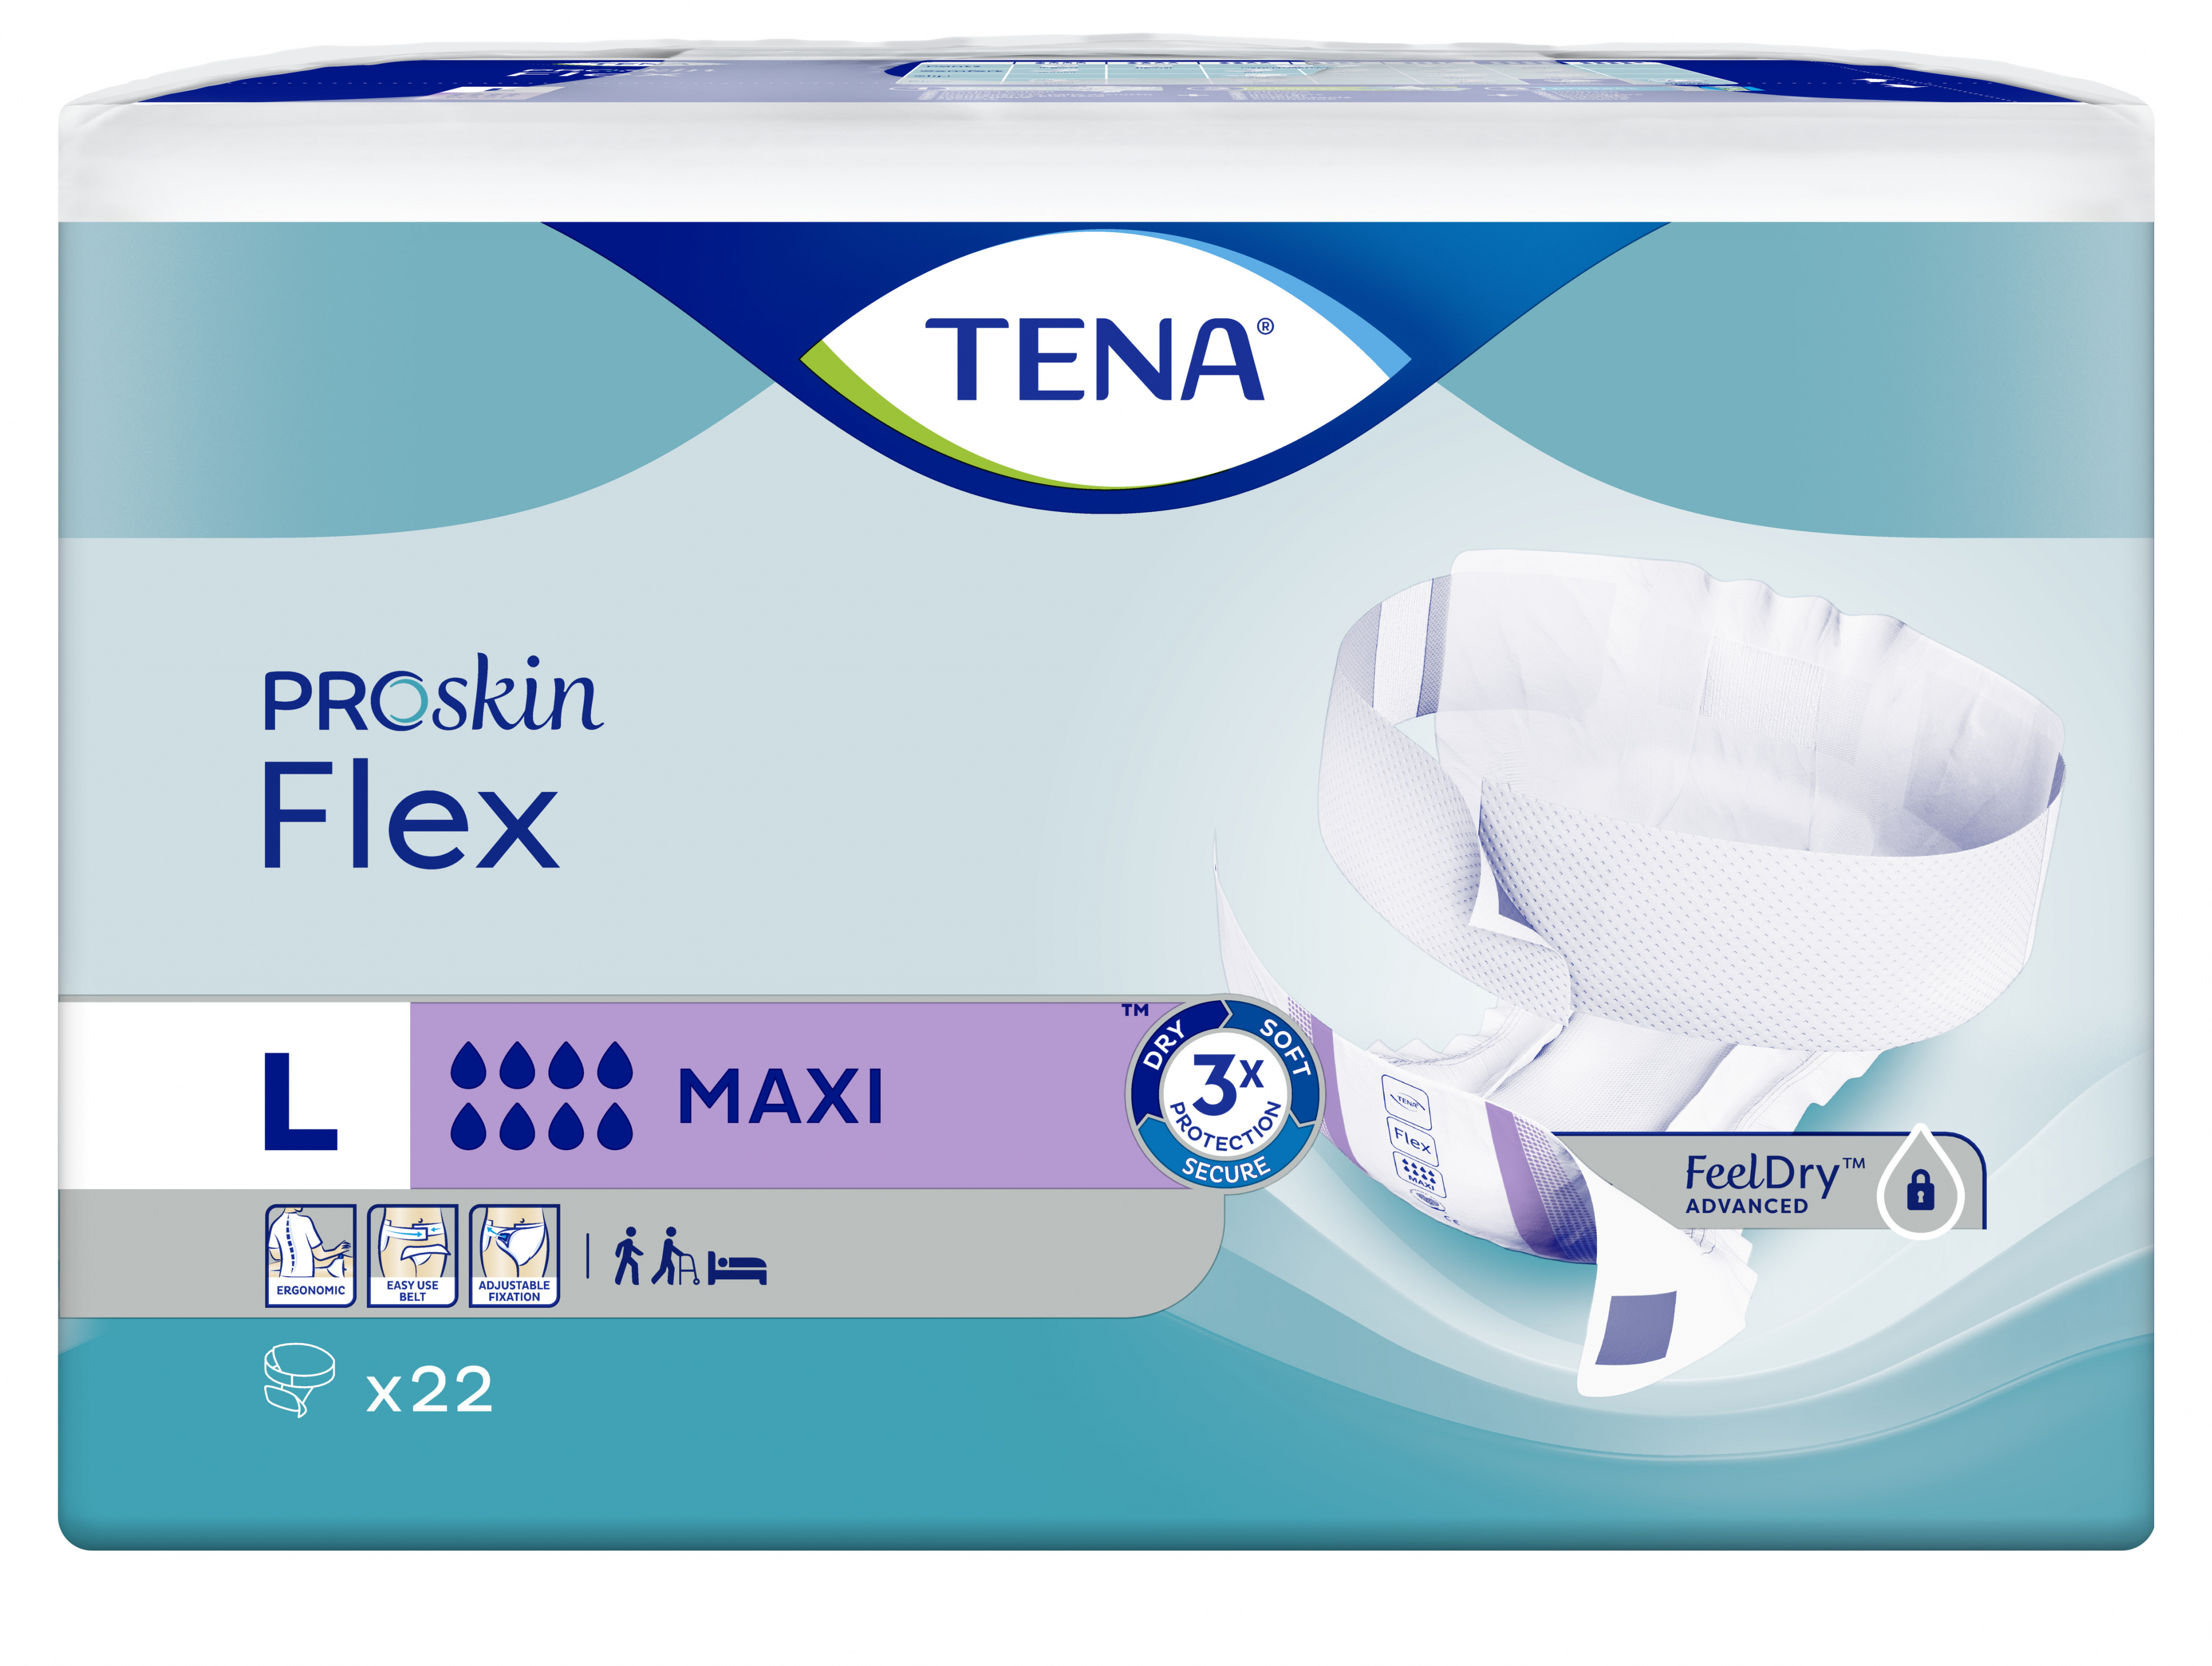 TENA PROskin Flex Maxi Large 22s